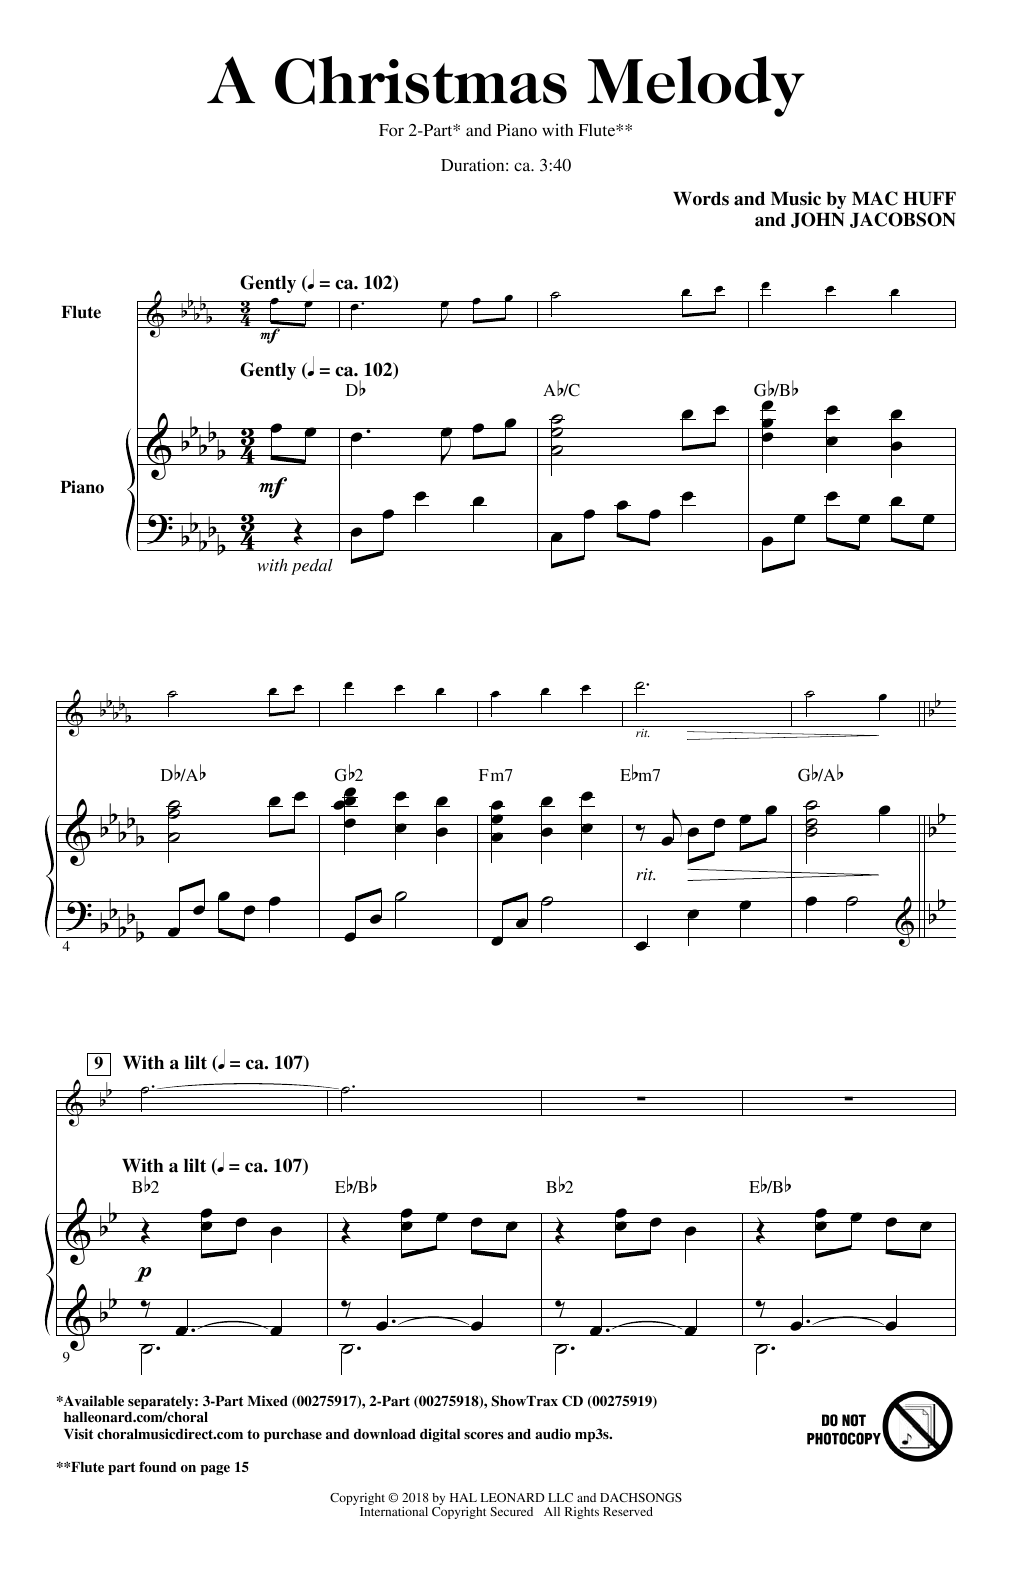 John Jacobson, Mac Huff A Christmas Melody Sheet Music Notes & Chords for 3-Part Mixed - Download or Print PDF